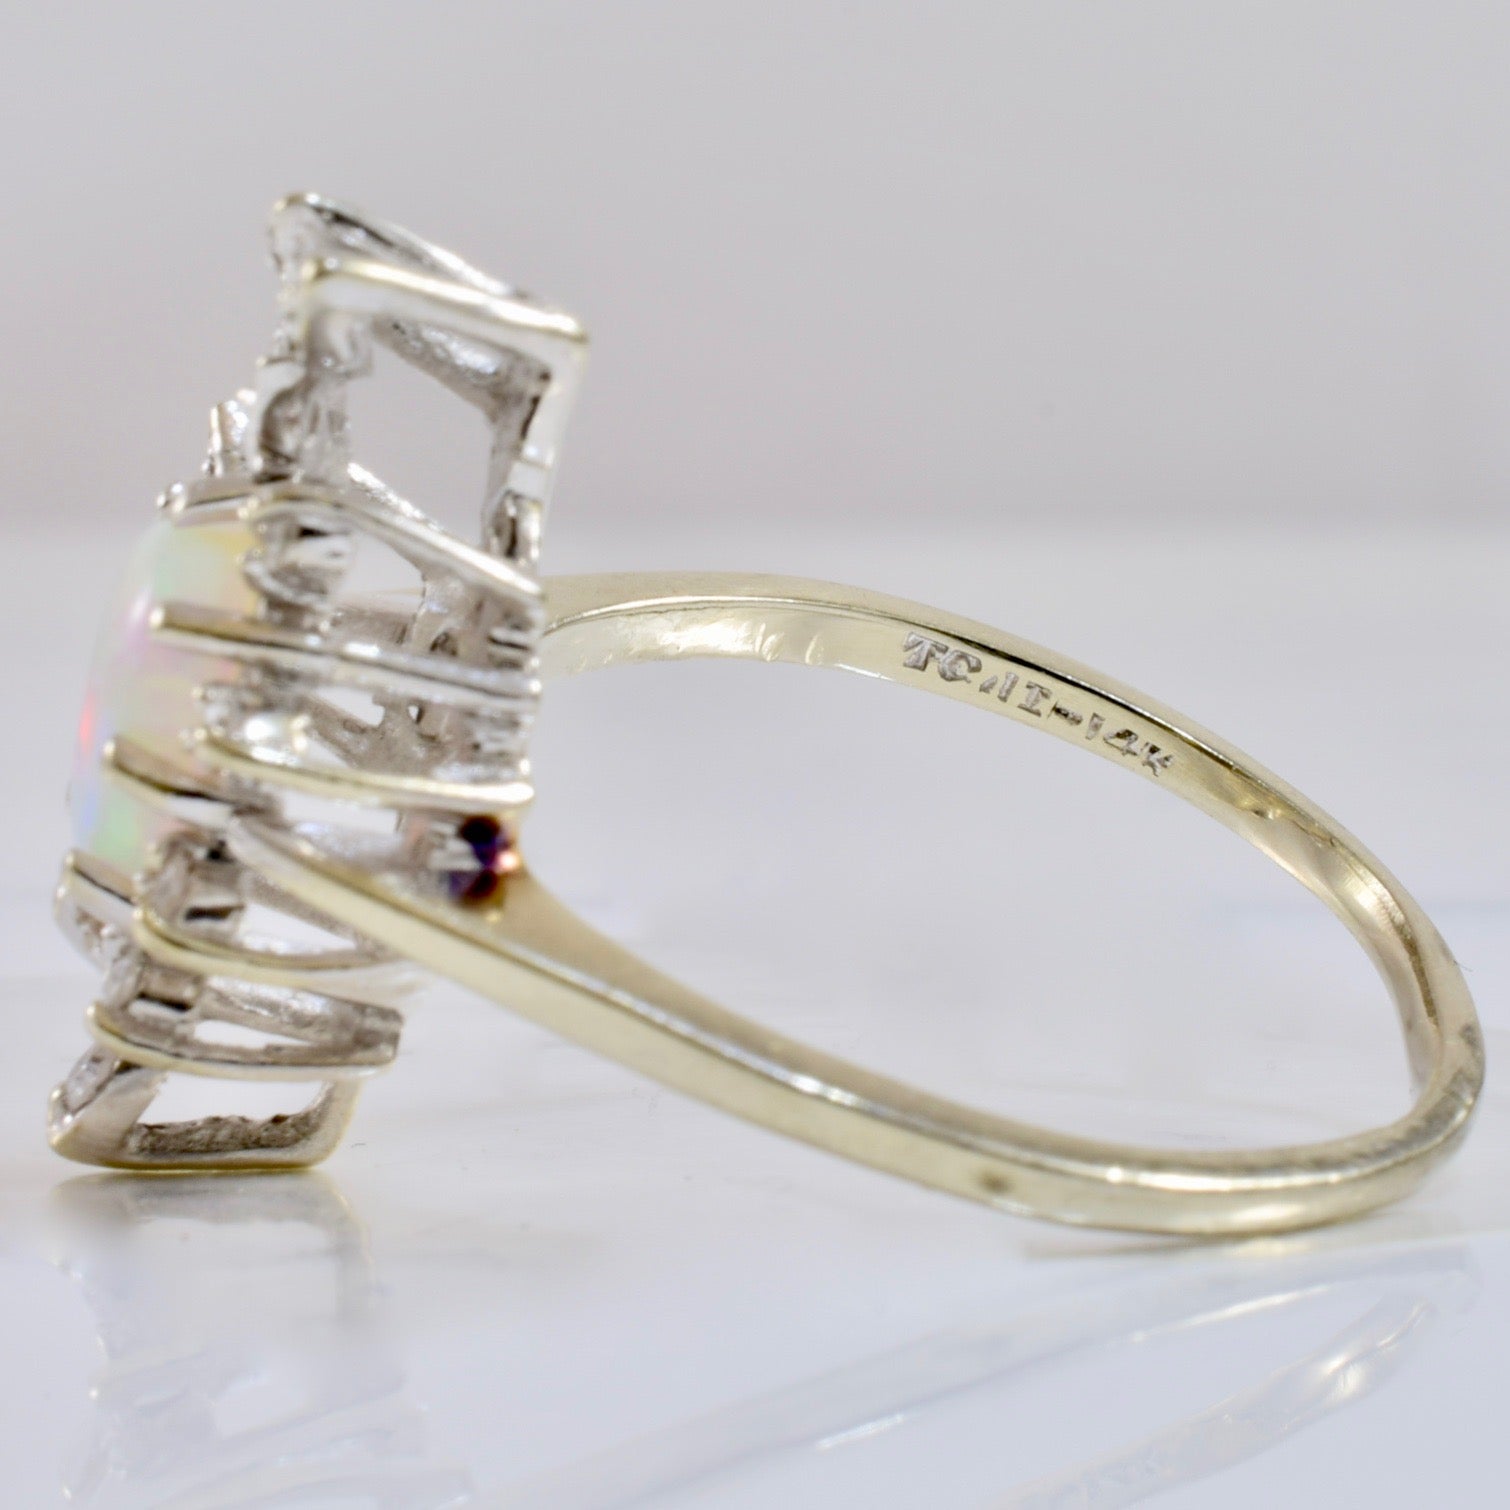 High Set Opal and Diamond Ring | 0.18 ctw SZ 10.25 |